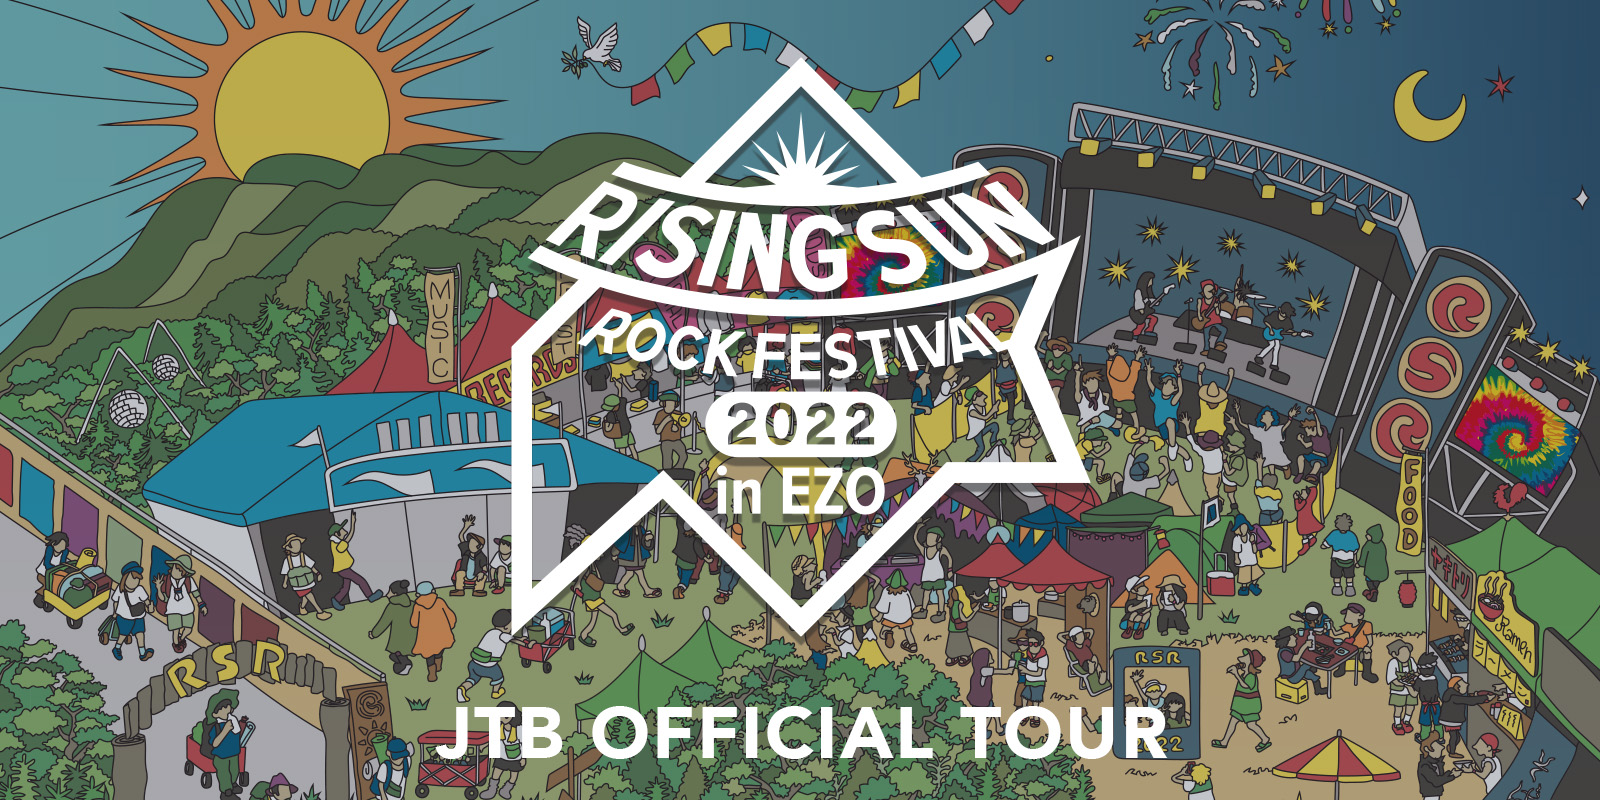 RISING SUN ROCK FESTIVAL 2022 in EZO JTB OFFISIAL TOUR